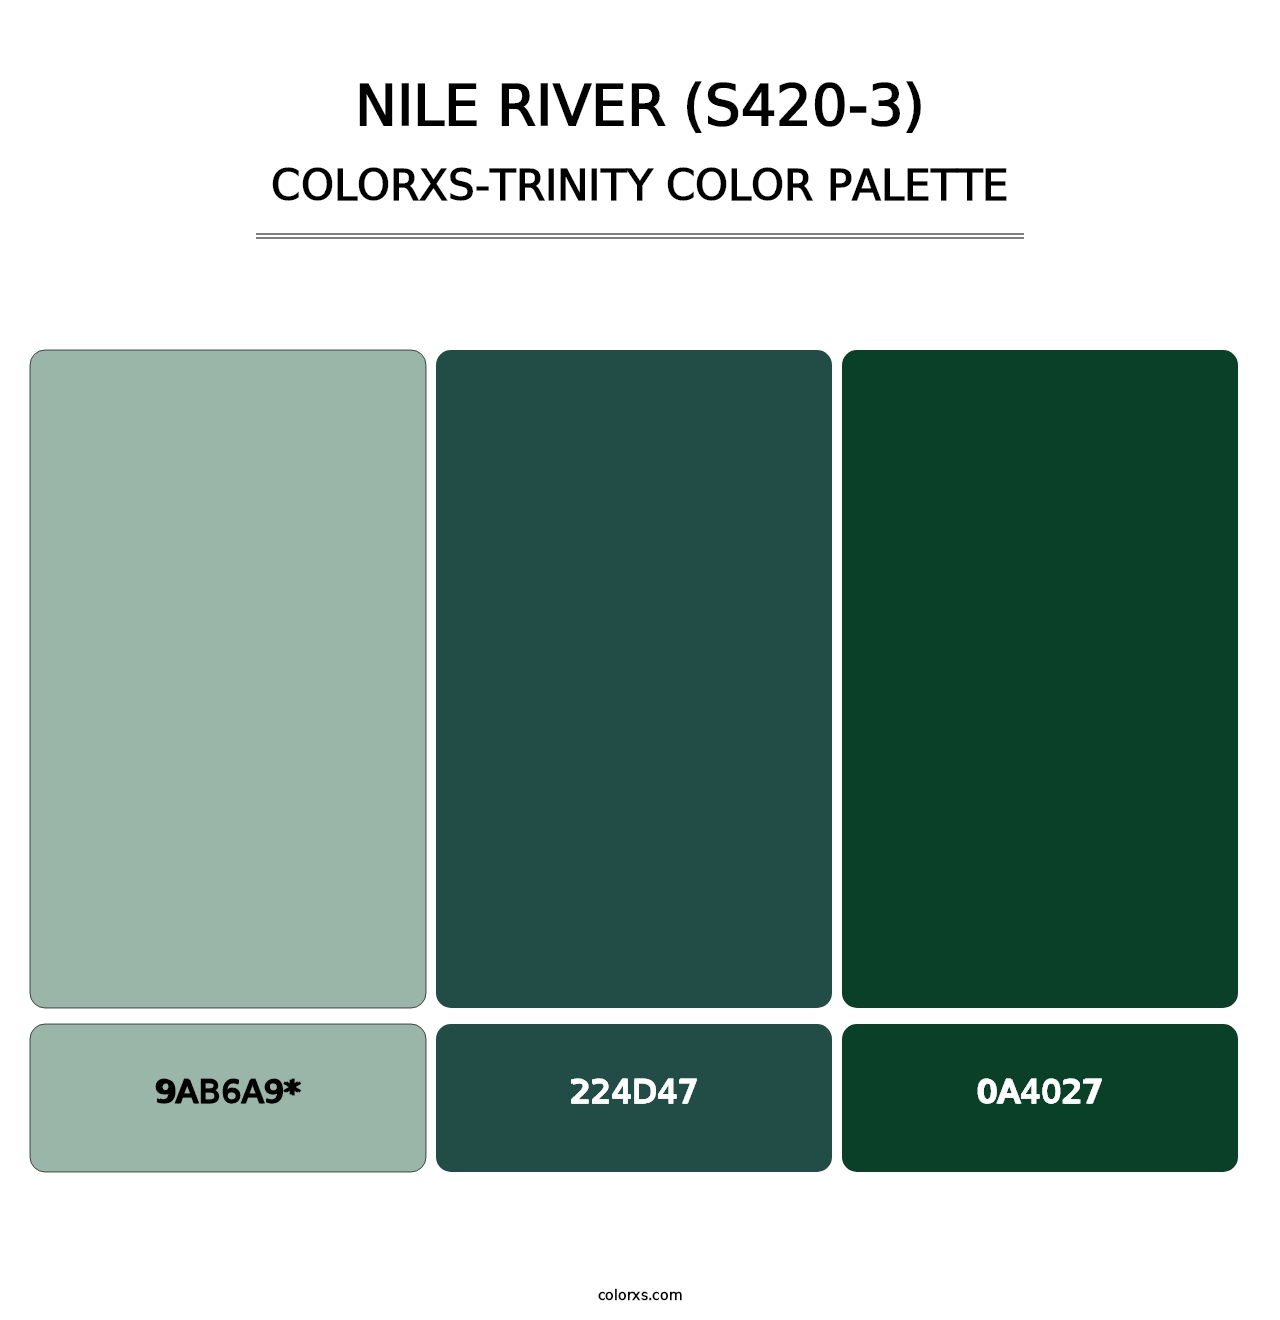 Nile River (S420-3) - Colorxs Trinity Palette